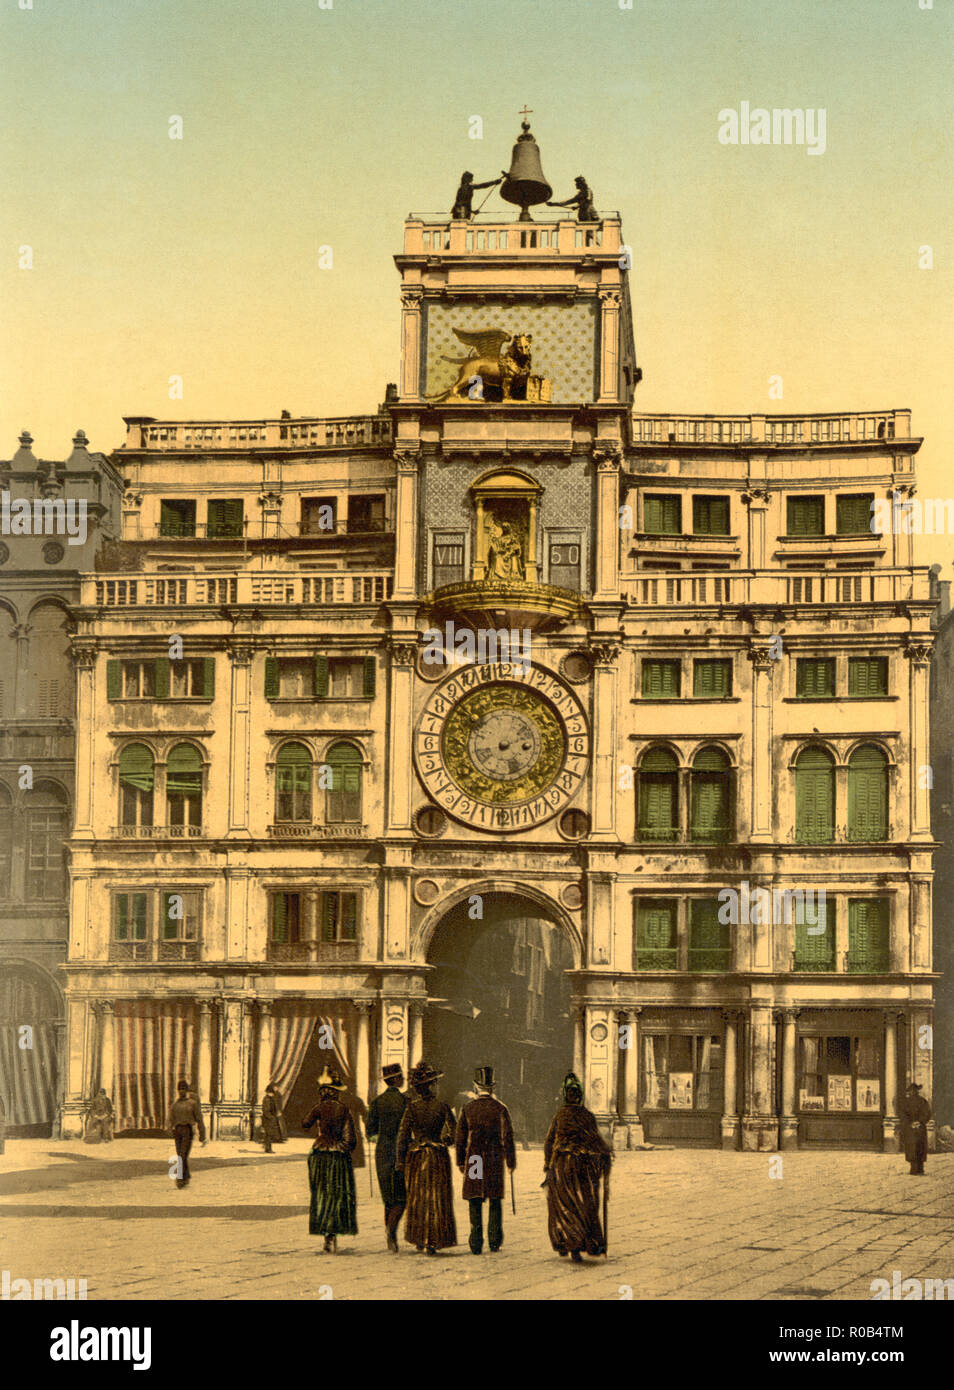 Clock Tower, Piazza San Marco, Venice, Italy, Photochrome Print, Detroit Publishing Company, 1900 Stock Photo